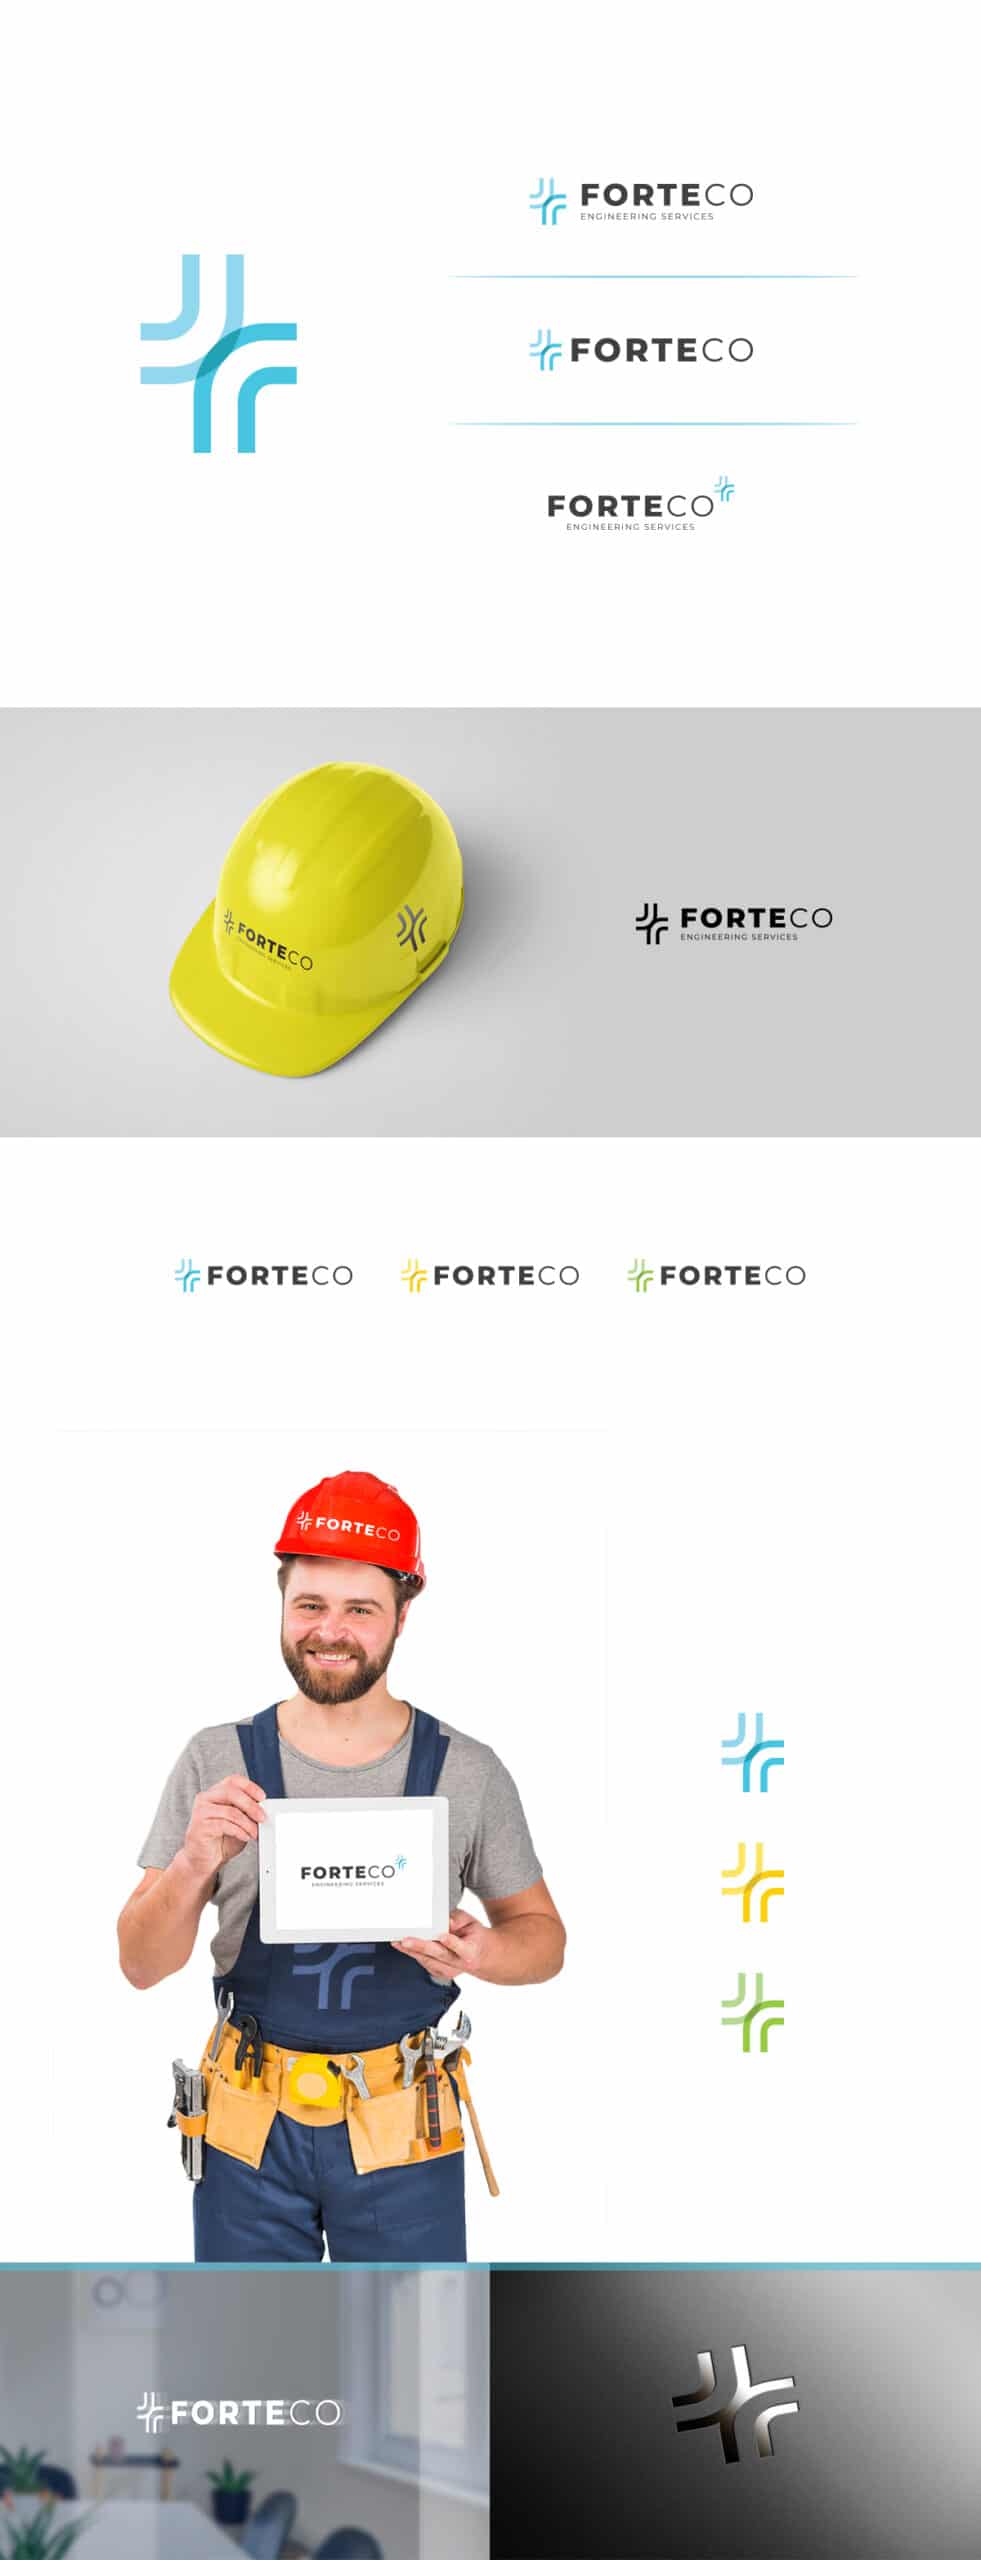 Forteco plus logotip scaled 2